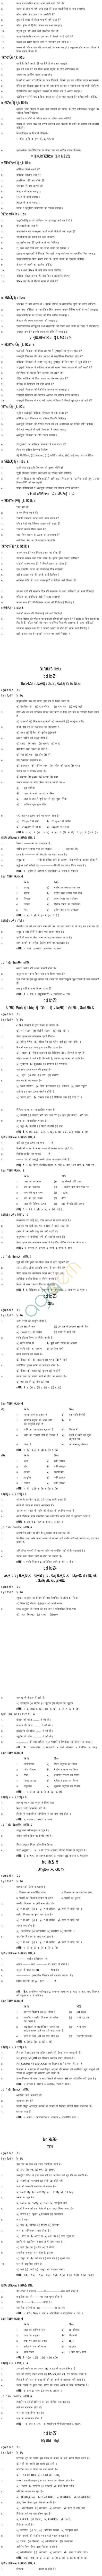 Chhattisgarh Board Class 11 Question Bank - Vigyan ke Tatva